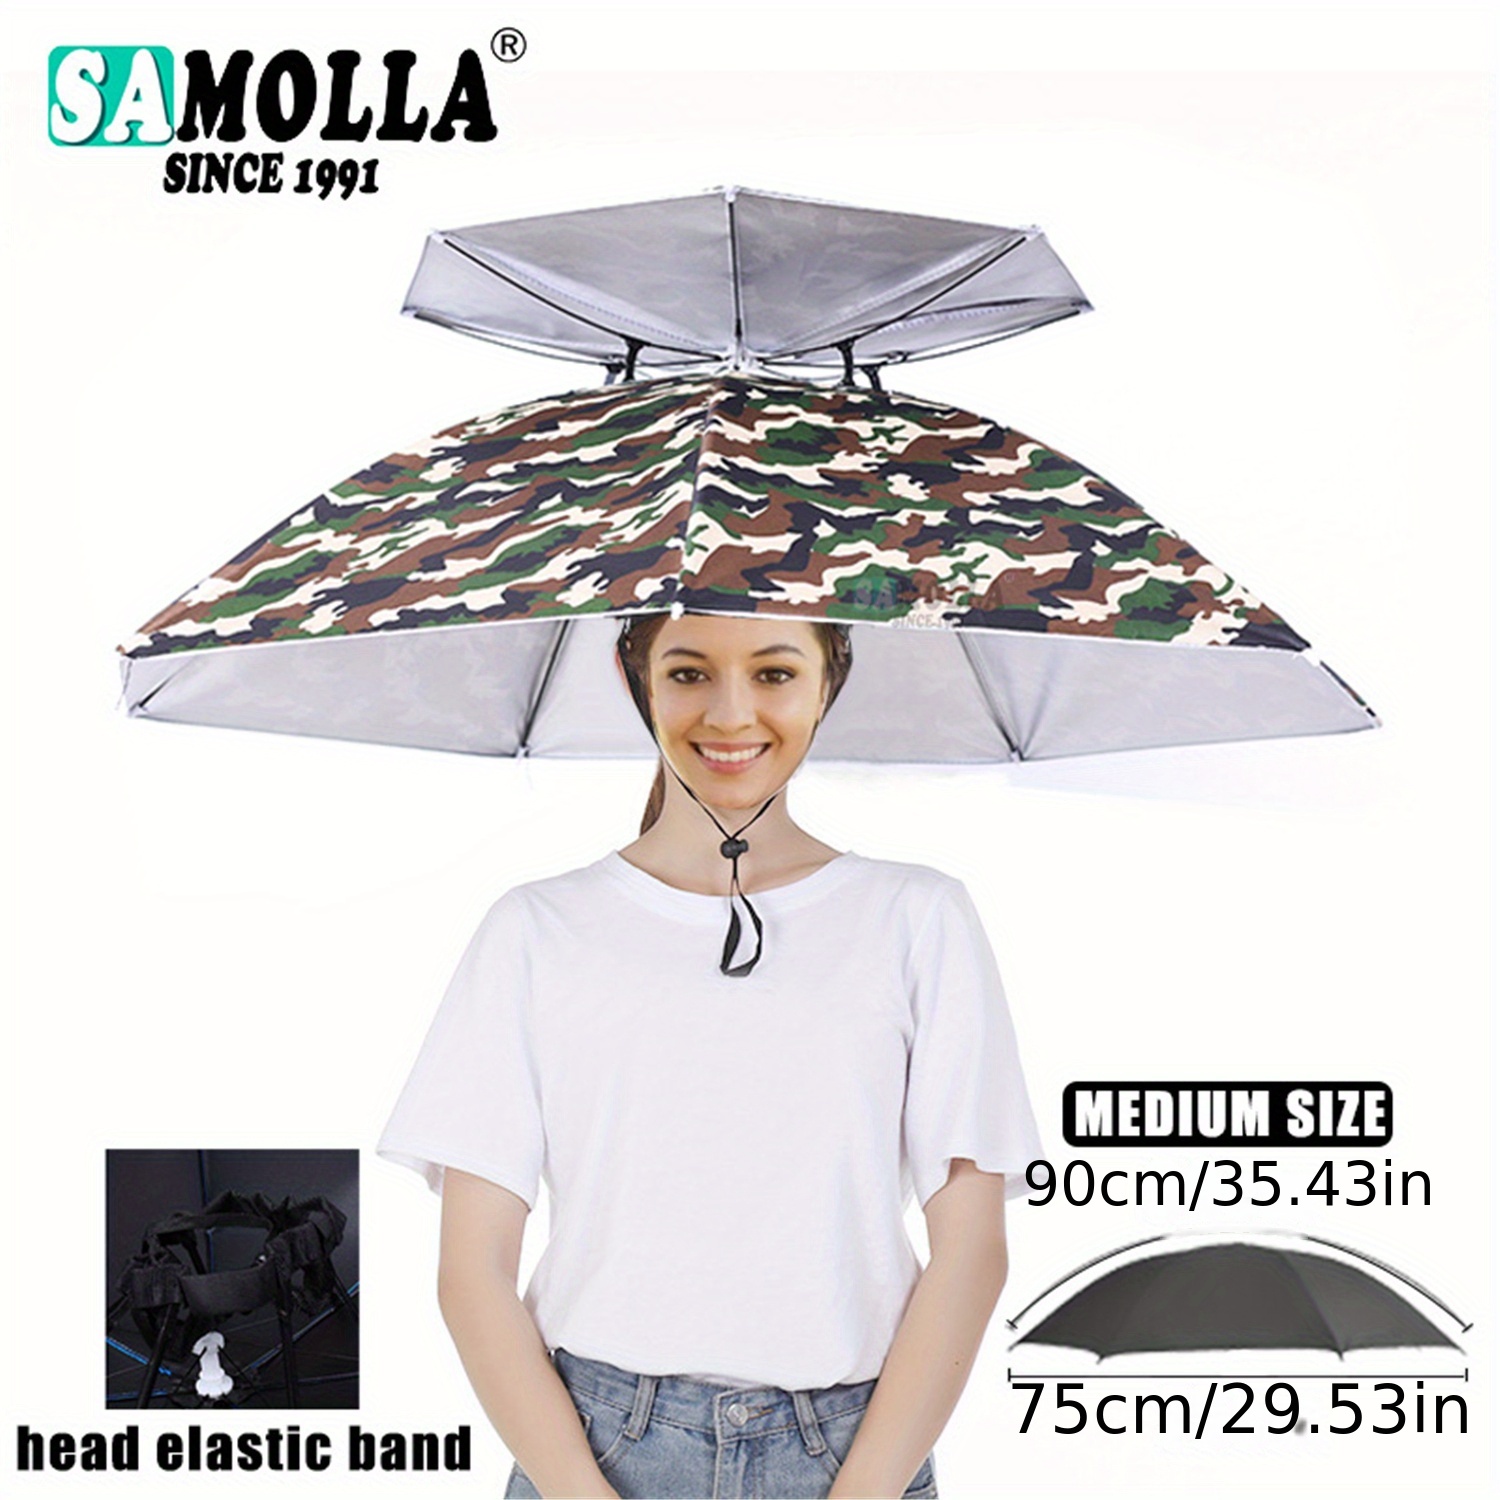 1pc Portable Foldable UV Protection Rain Umbrella Hat, Sunshade Waterproof Fishing Headwear for Outdoor Pesca Camping Beach, Fishing Accessories